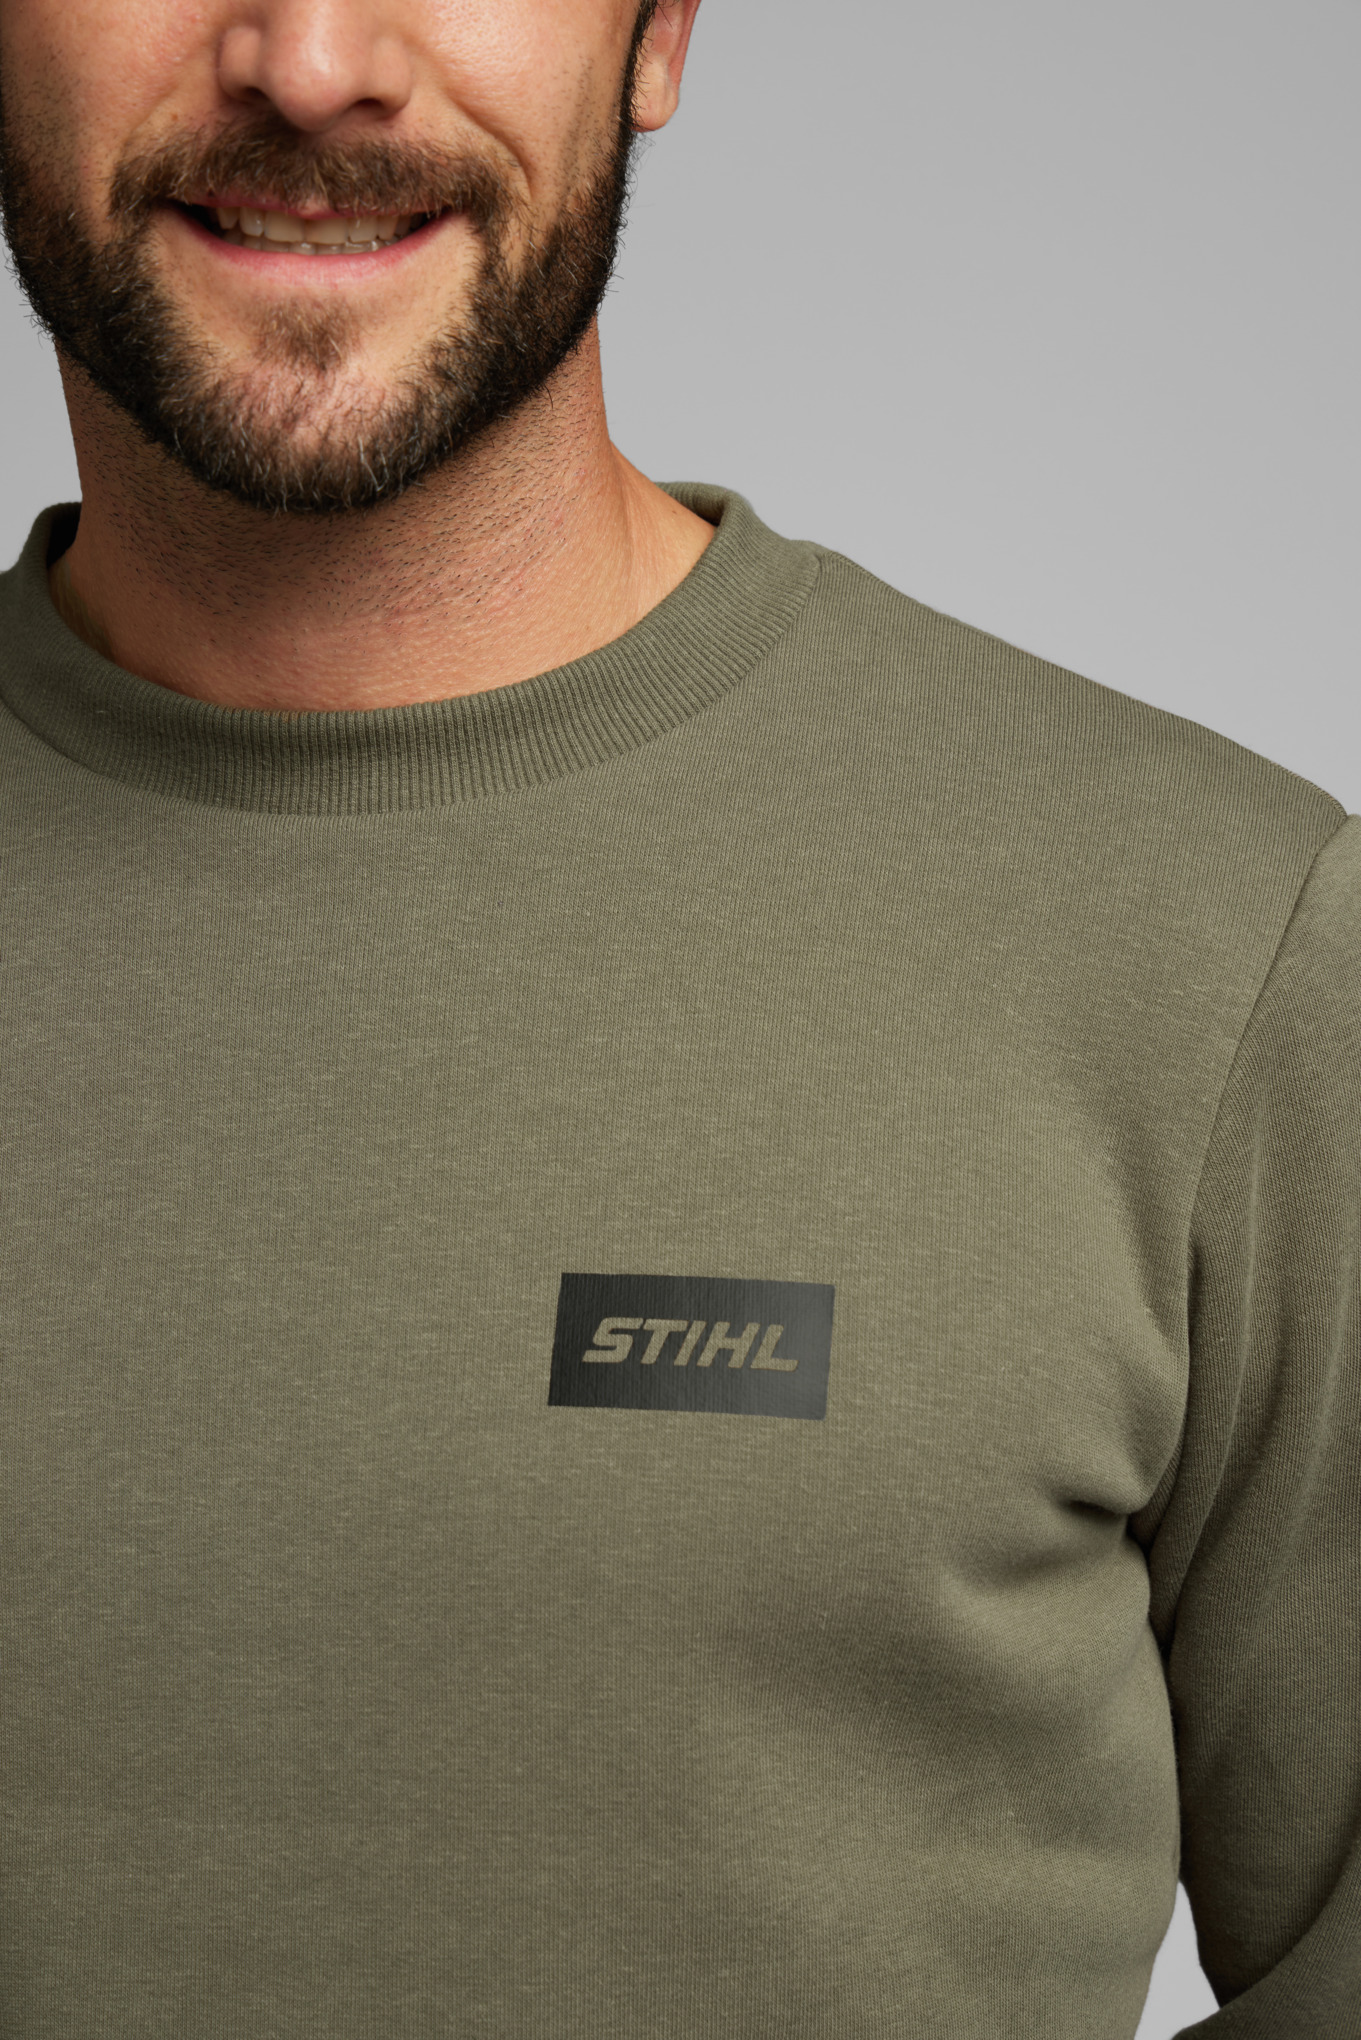 STIHL logo sweatshirt - olive green